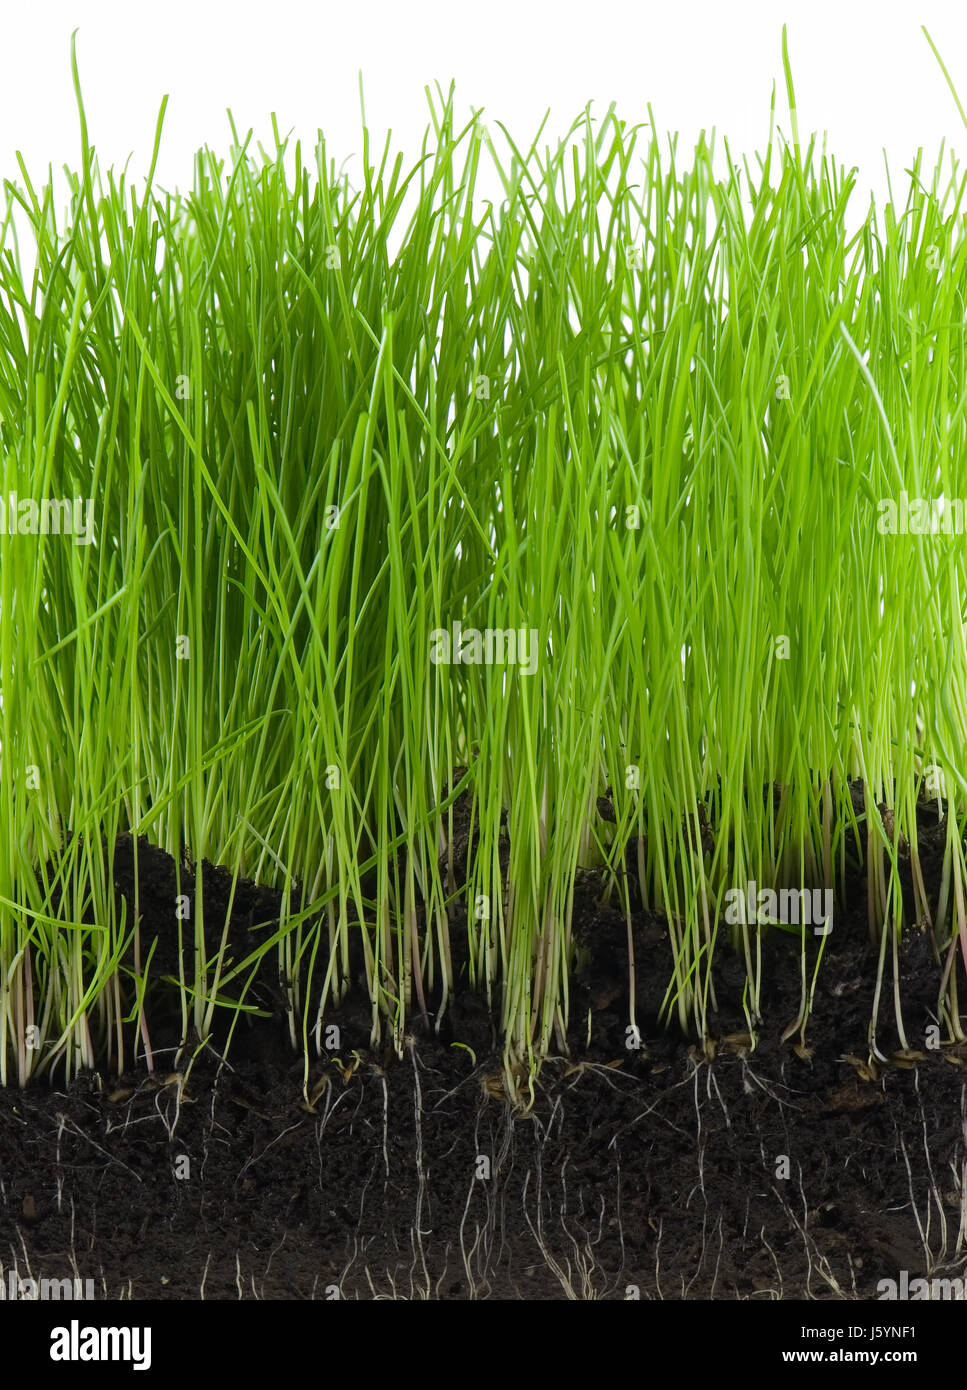 environment enviroment ground soil earth humus agriculture farming meadow grass Stock Photo